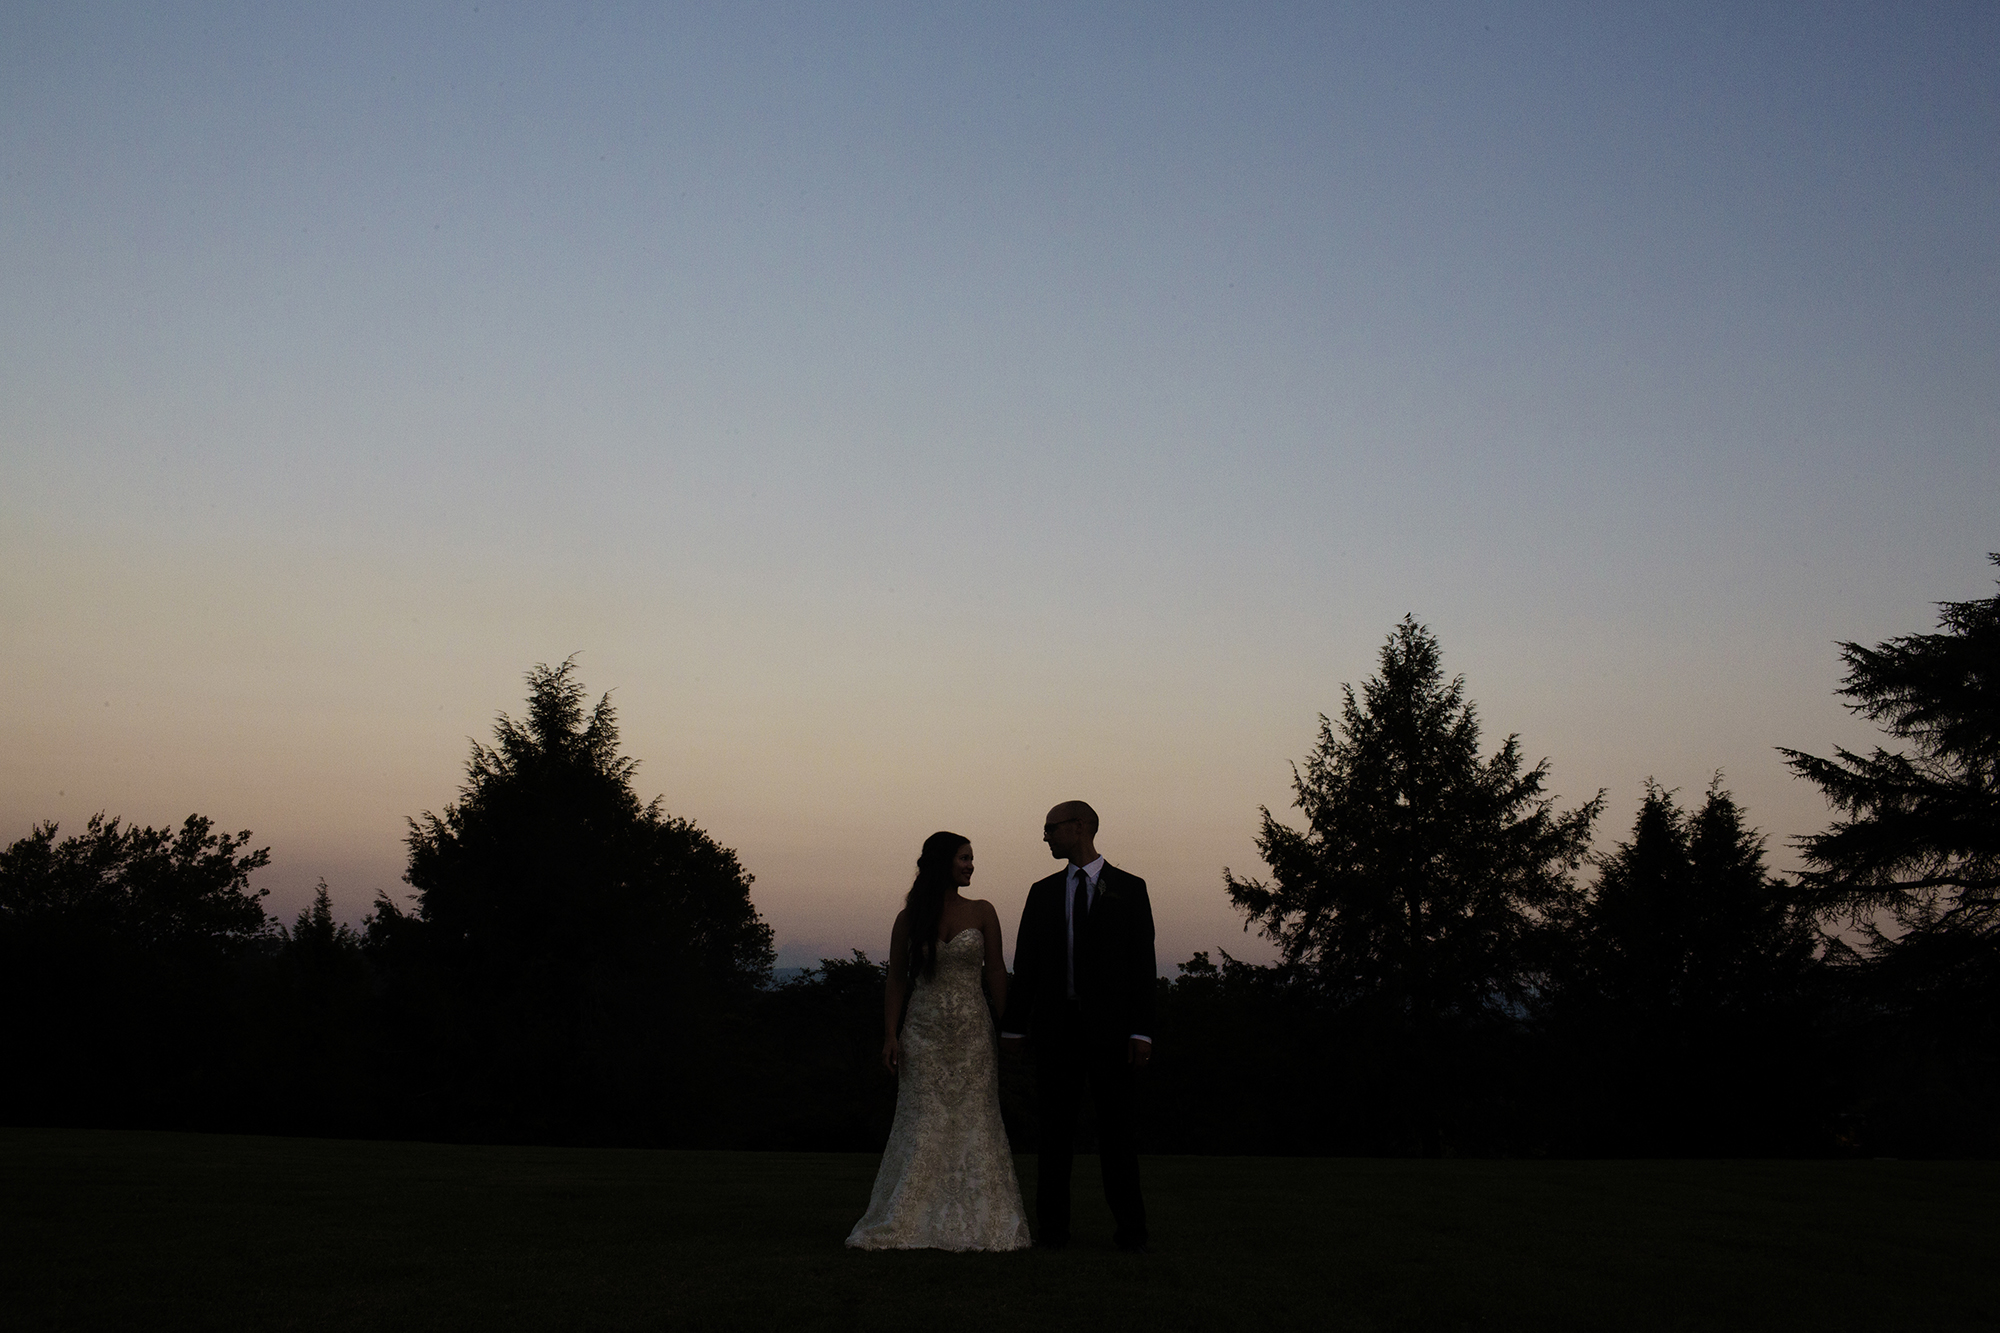 Knoxville, Tennessee Wedding Photos | Destination Wedding Photography by Photogen Inc. | Eliesa Johnson | Based in Minneapolis, Minnesota